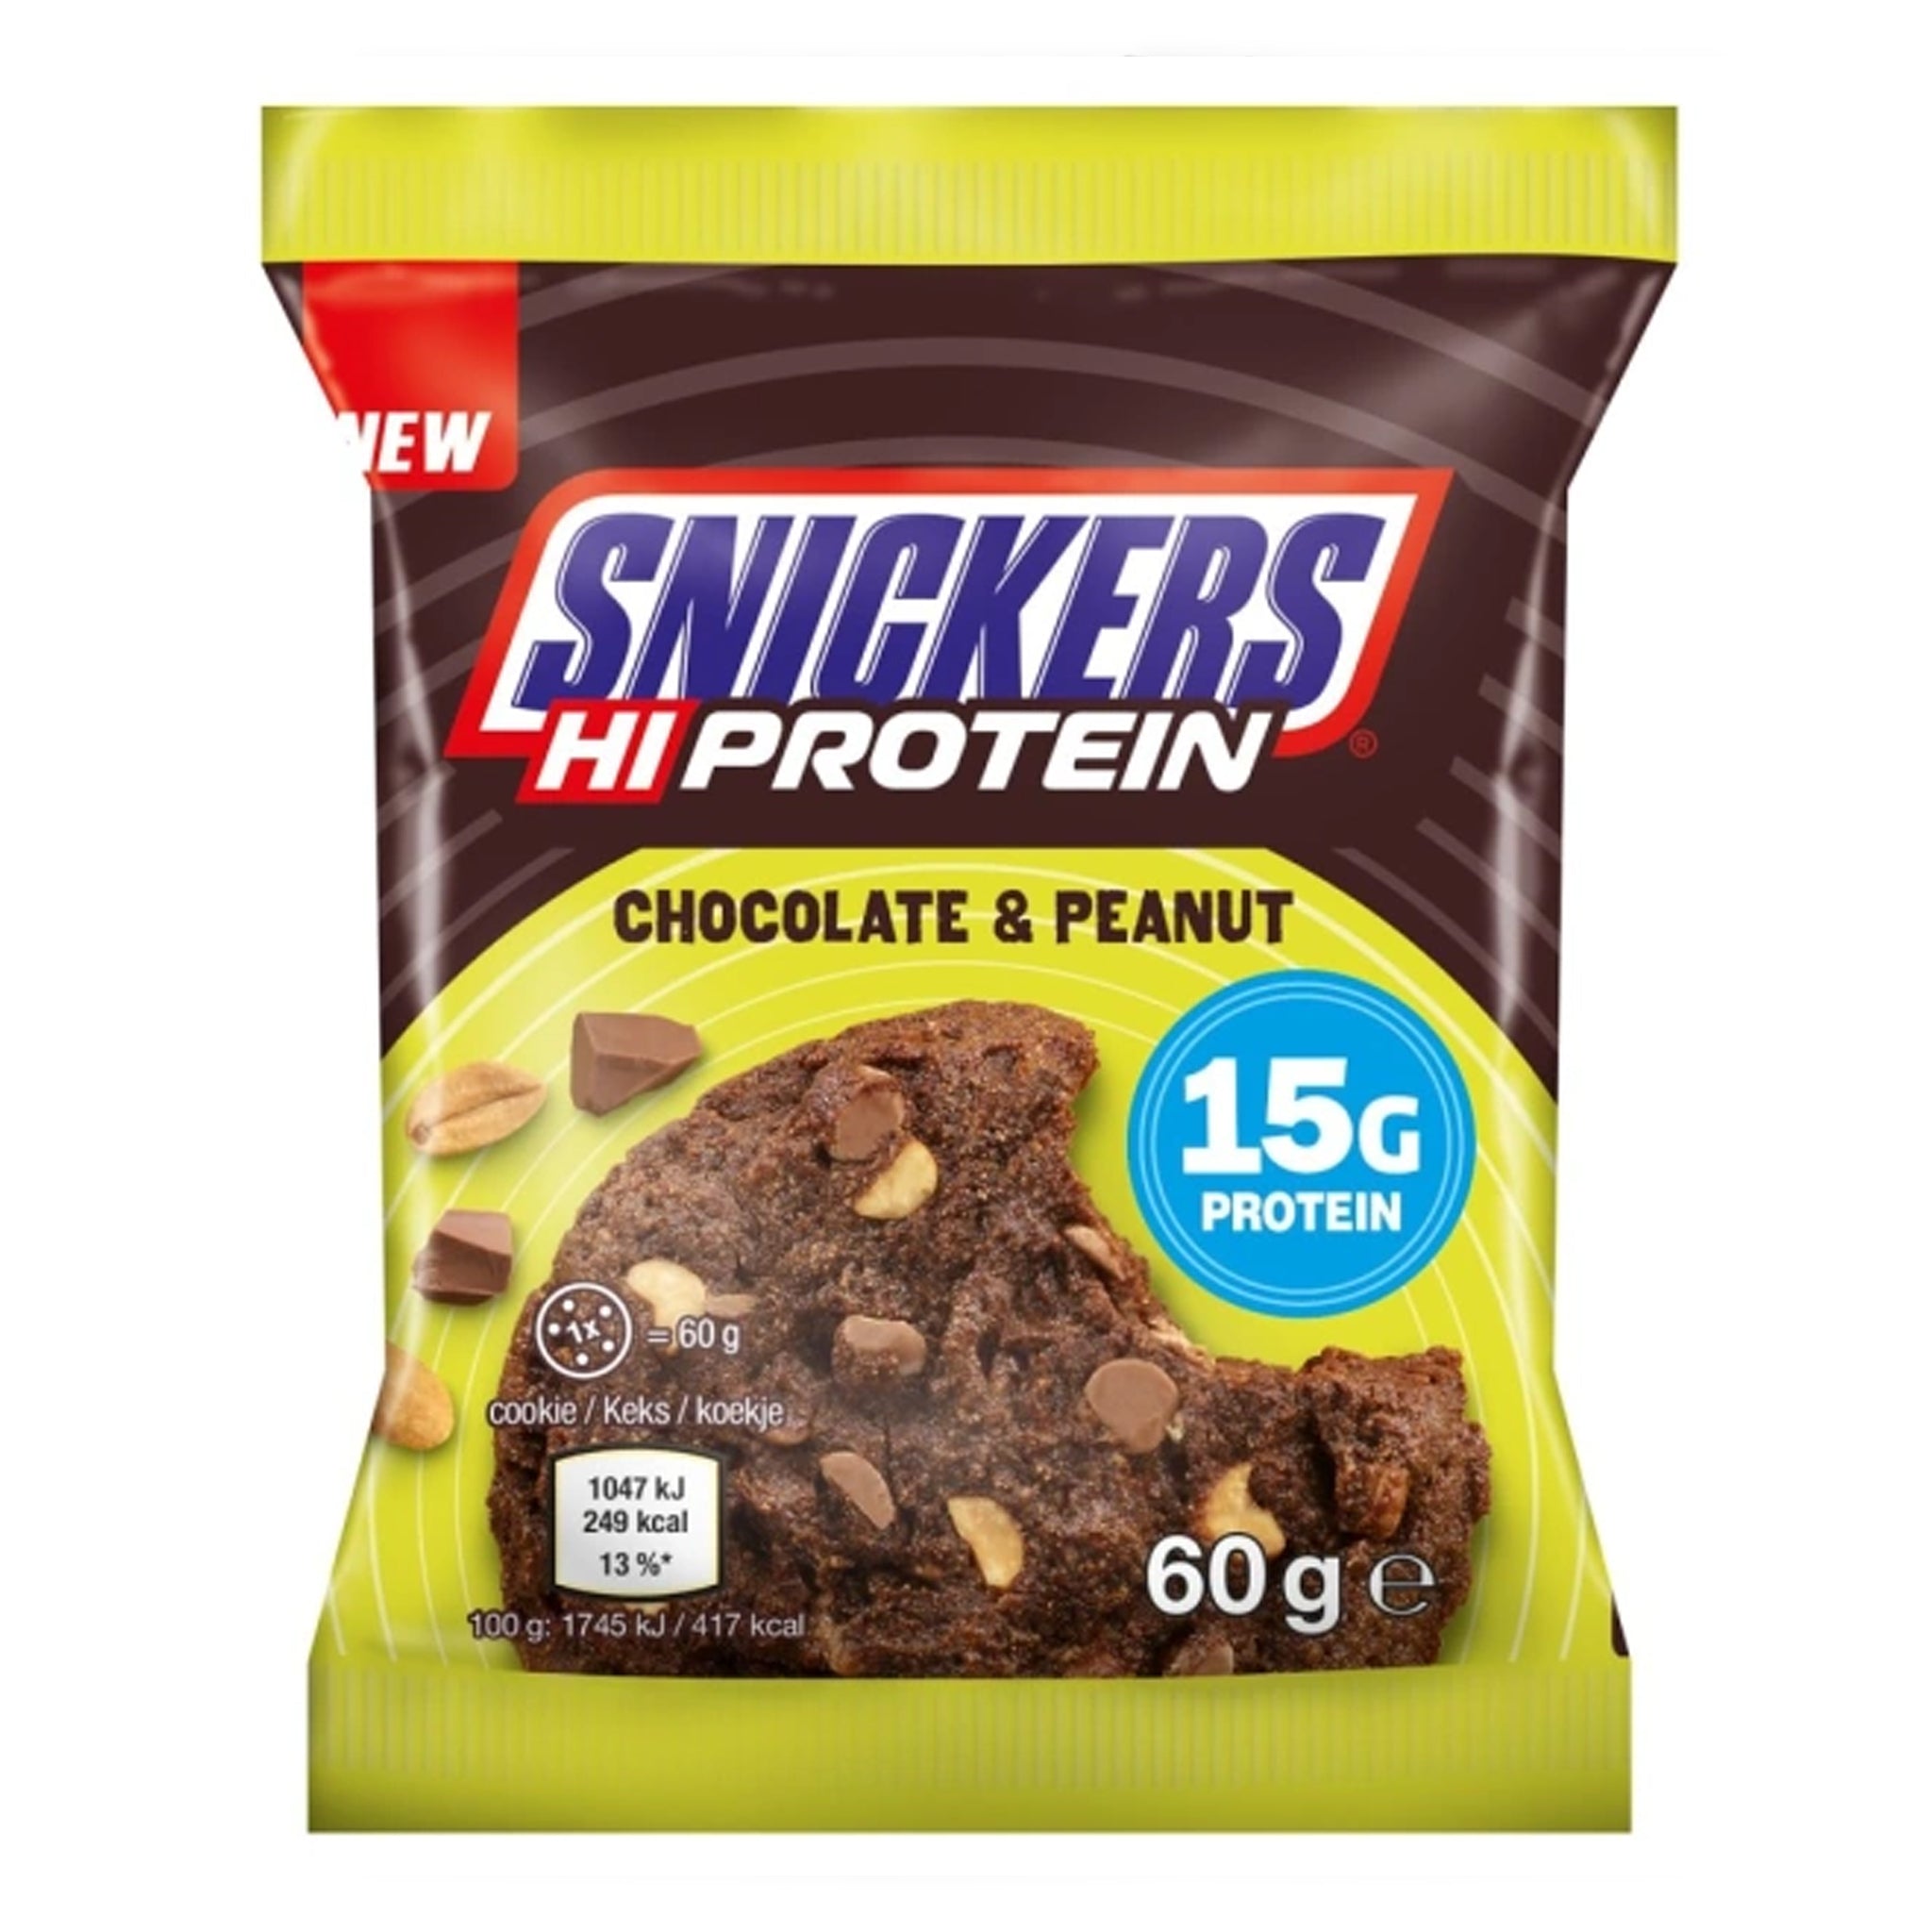 Snickers Chocolate & Peanut Butter Hi Protein עוגית סניקרס פרוטאין עם בוטנים ושוקולד